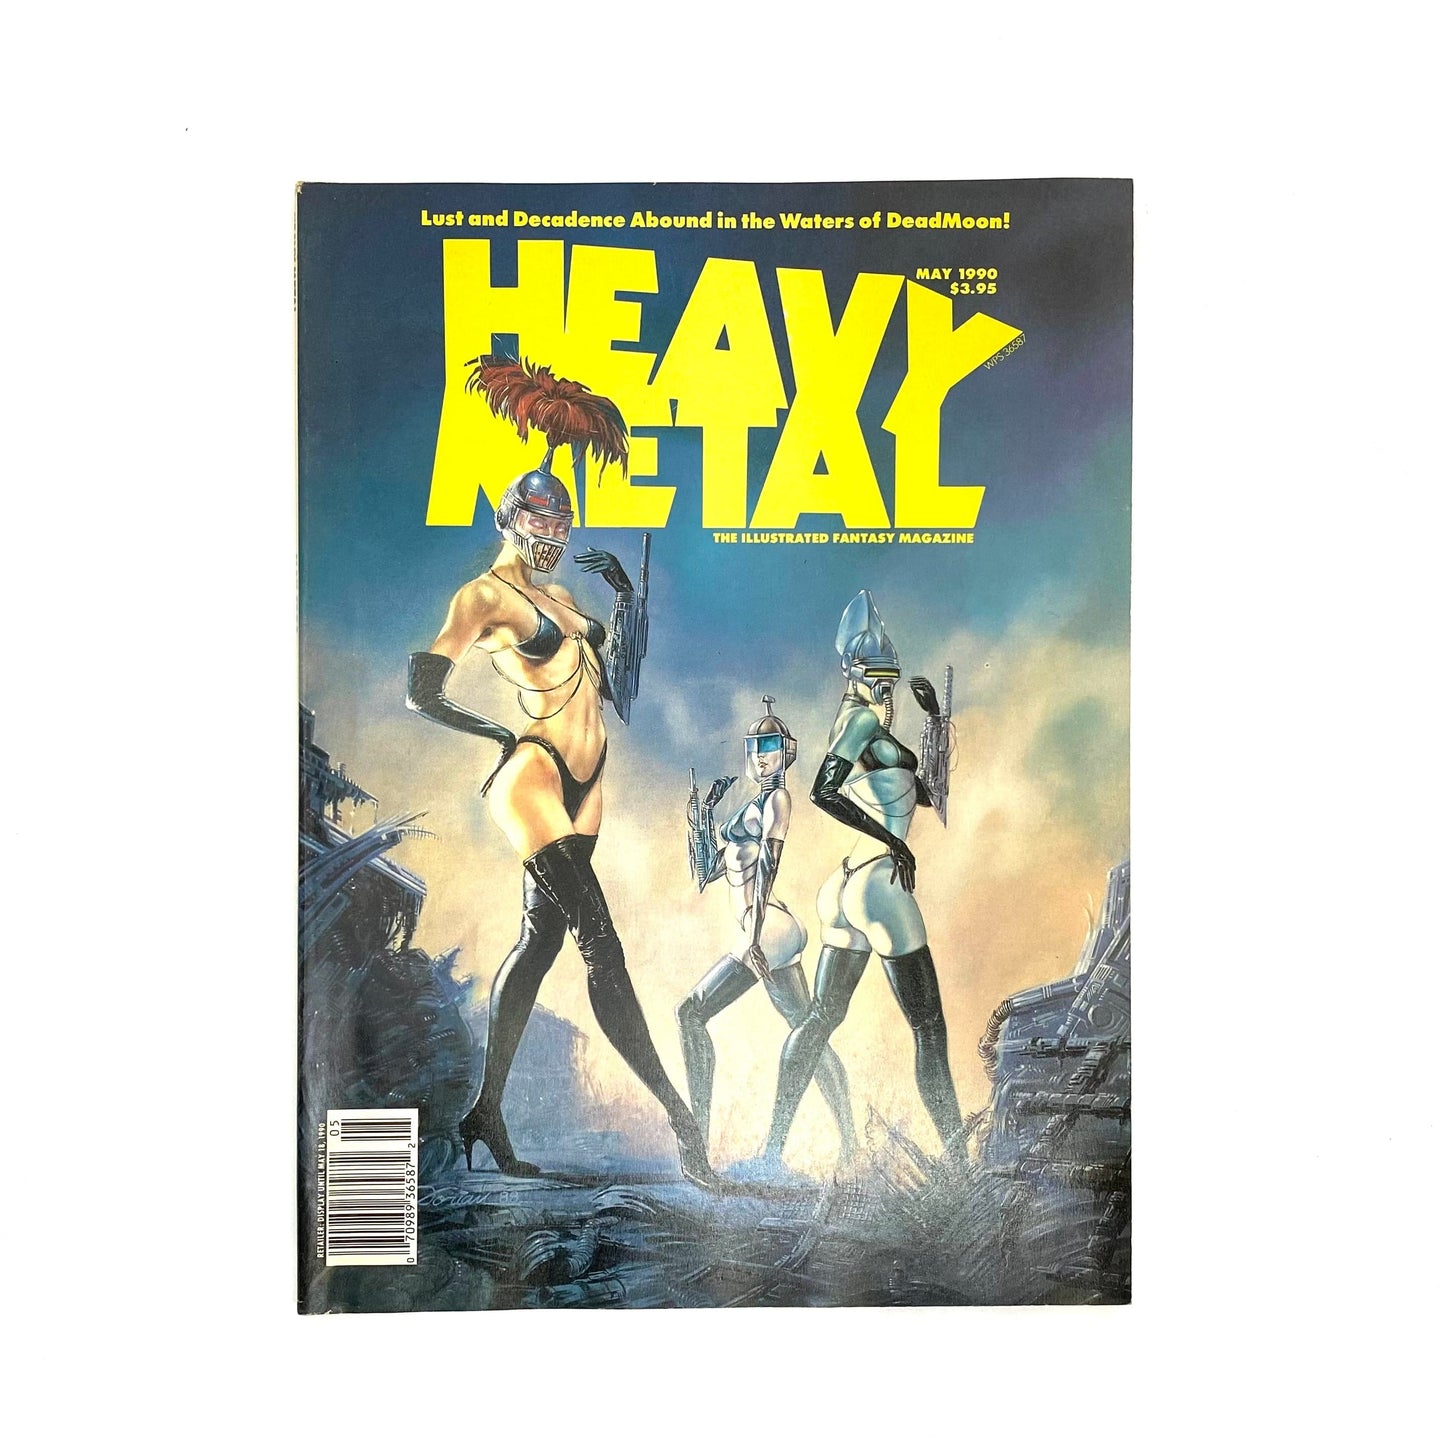 HEAVY METAL - Adult Illustrated Fantasy Erotic Magazine - May 1990